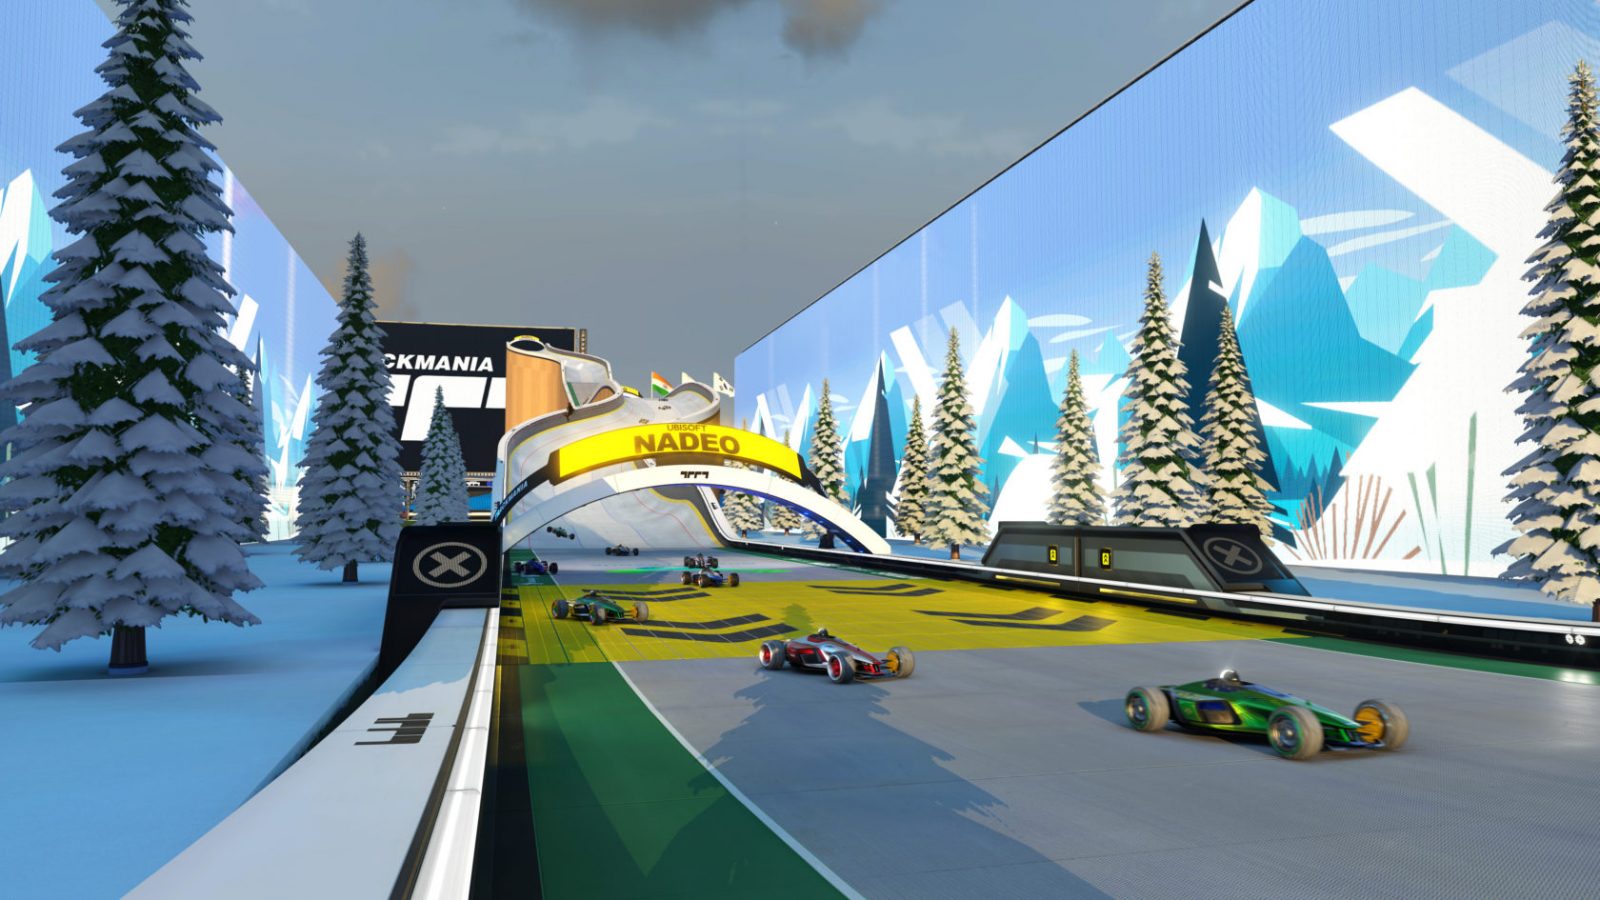 Trackmania Screenshot